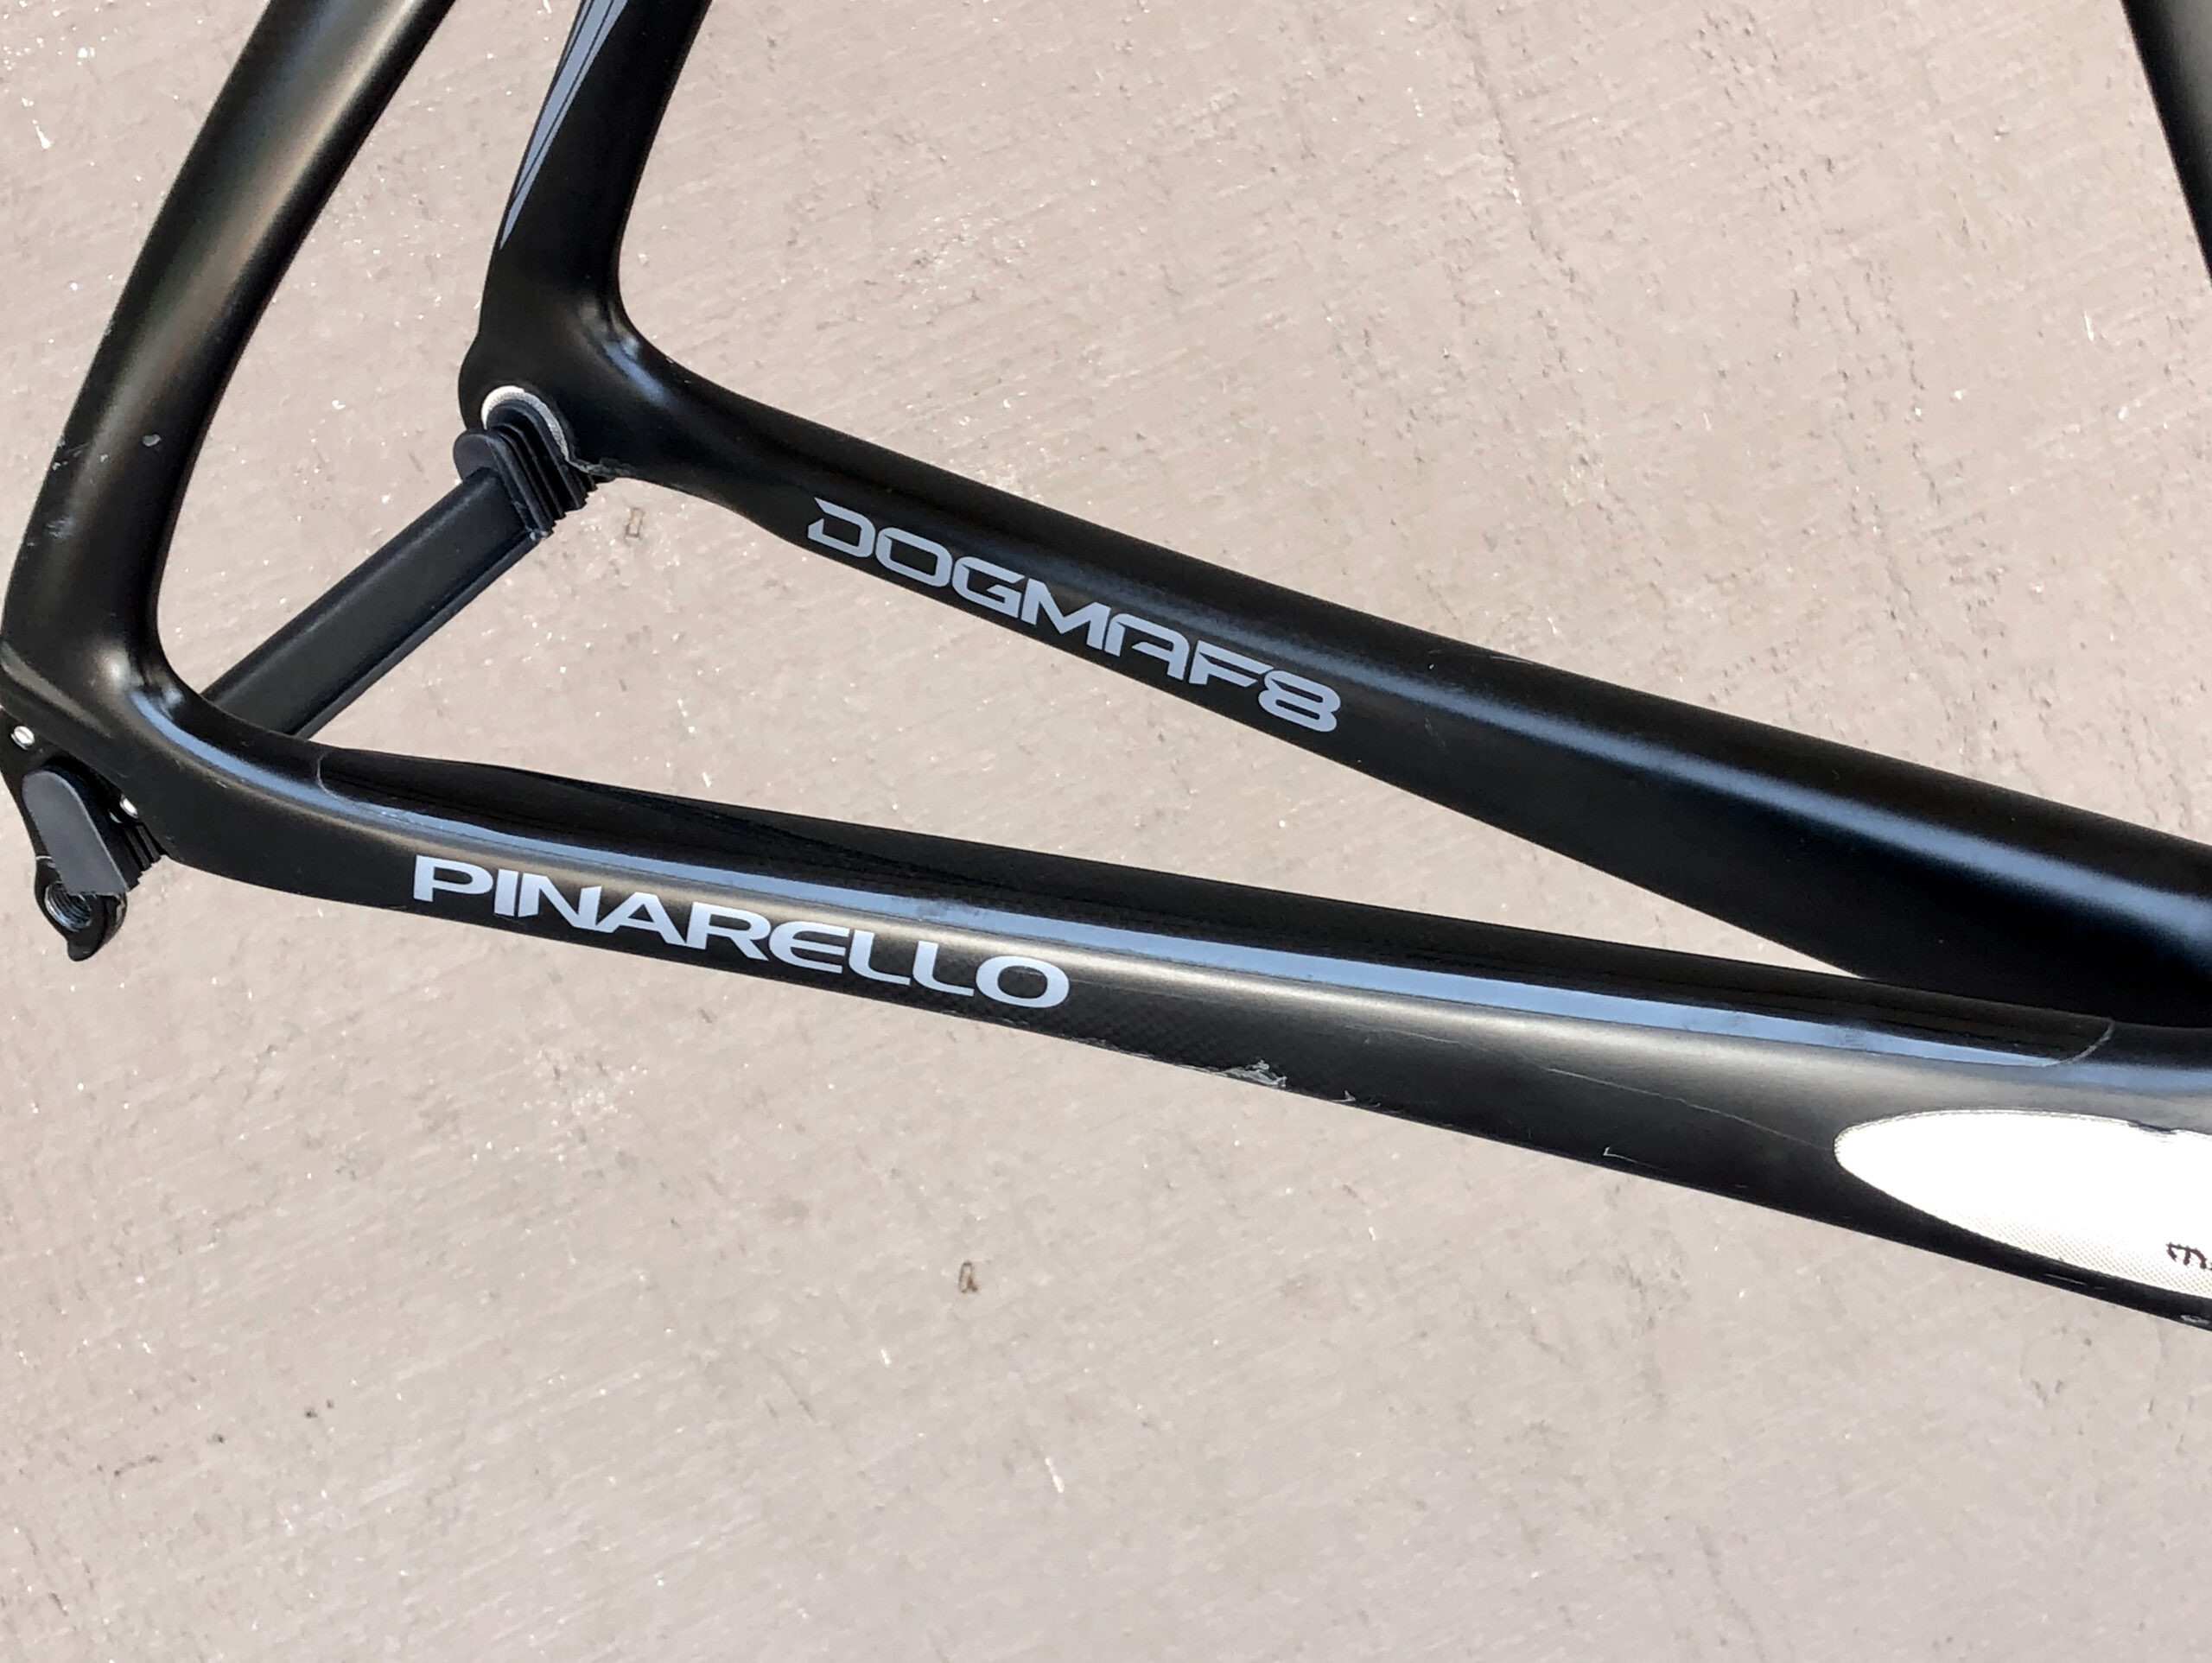 Pinarello Dogma F8 Full Carbon Road Frameset 53 cm Tour de France winner bicycle